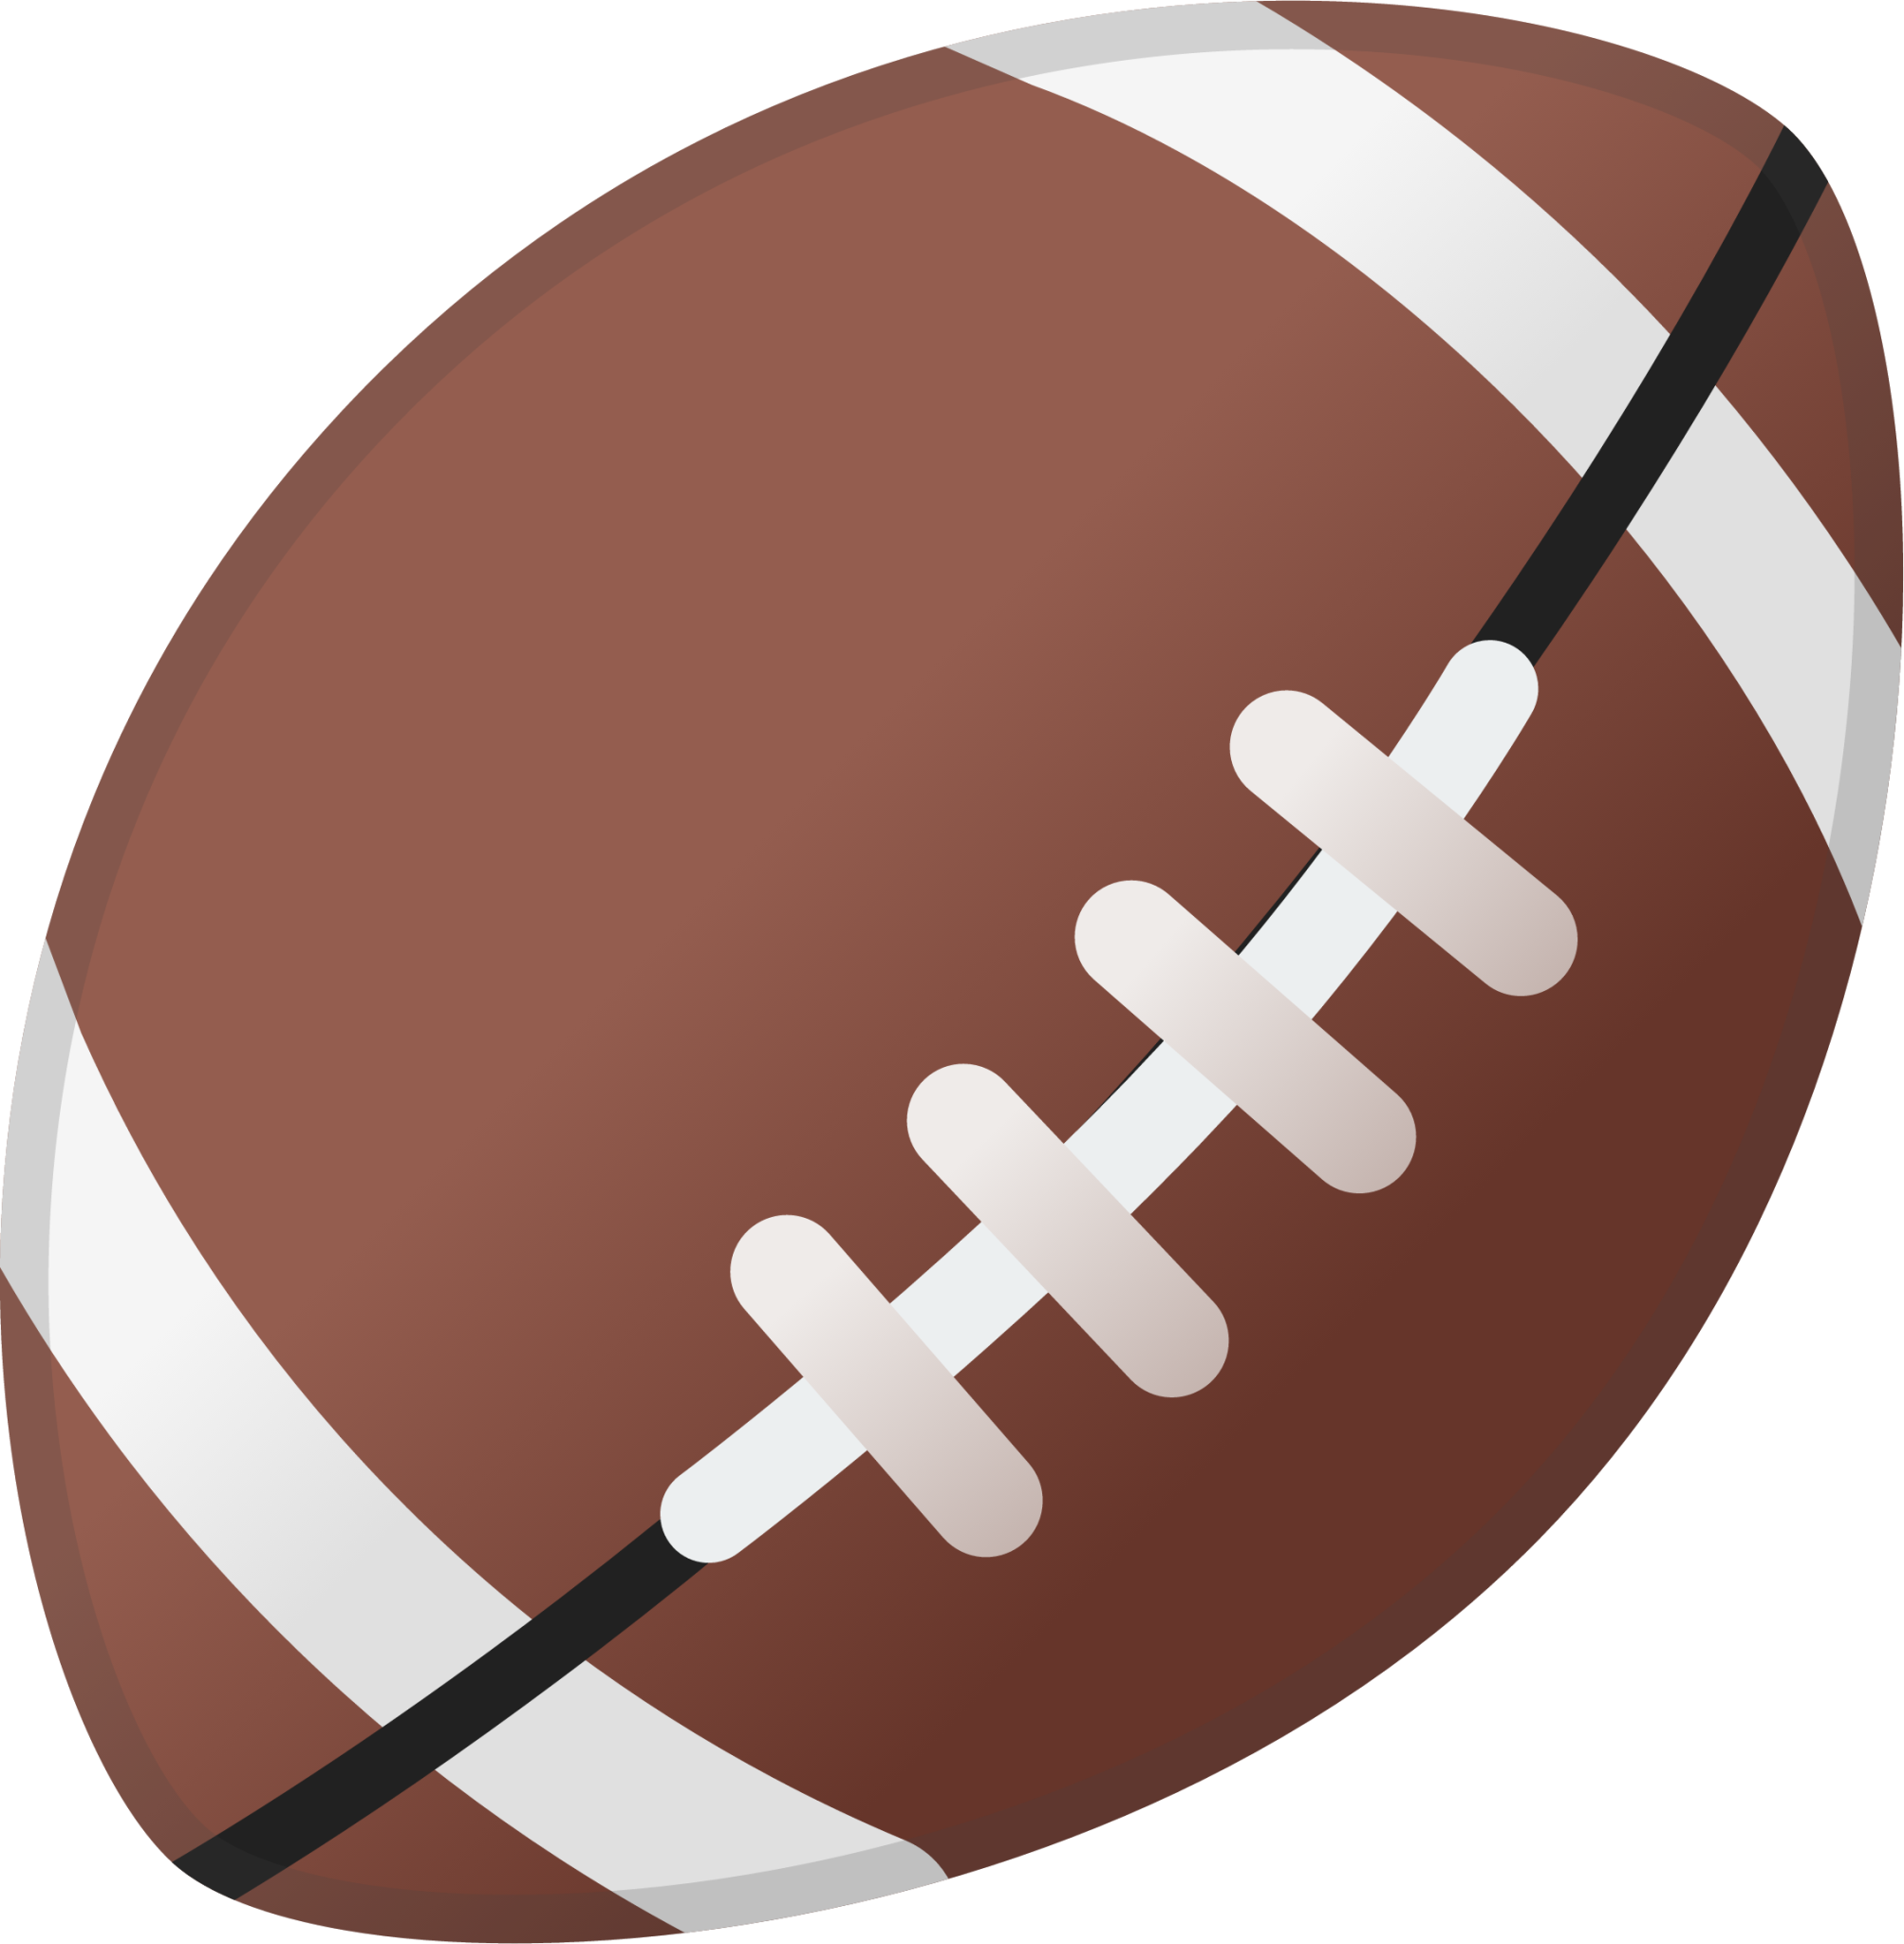 american football emoji